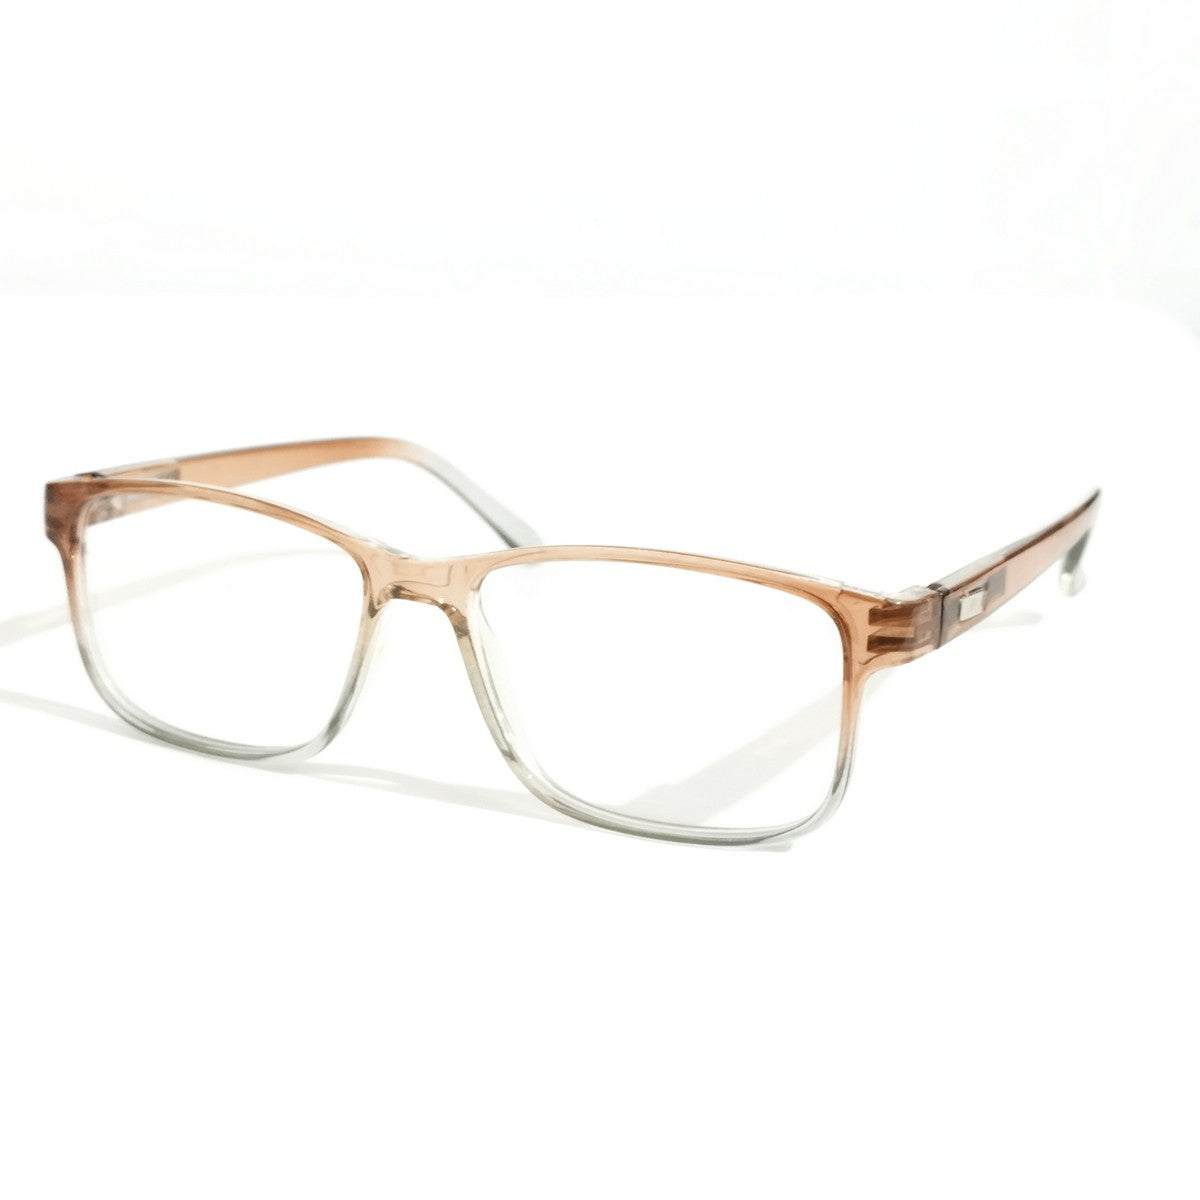 Enchanting Ombre Progressive Multifocal Glasses